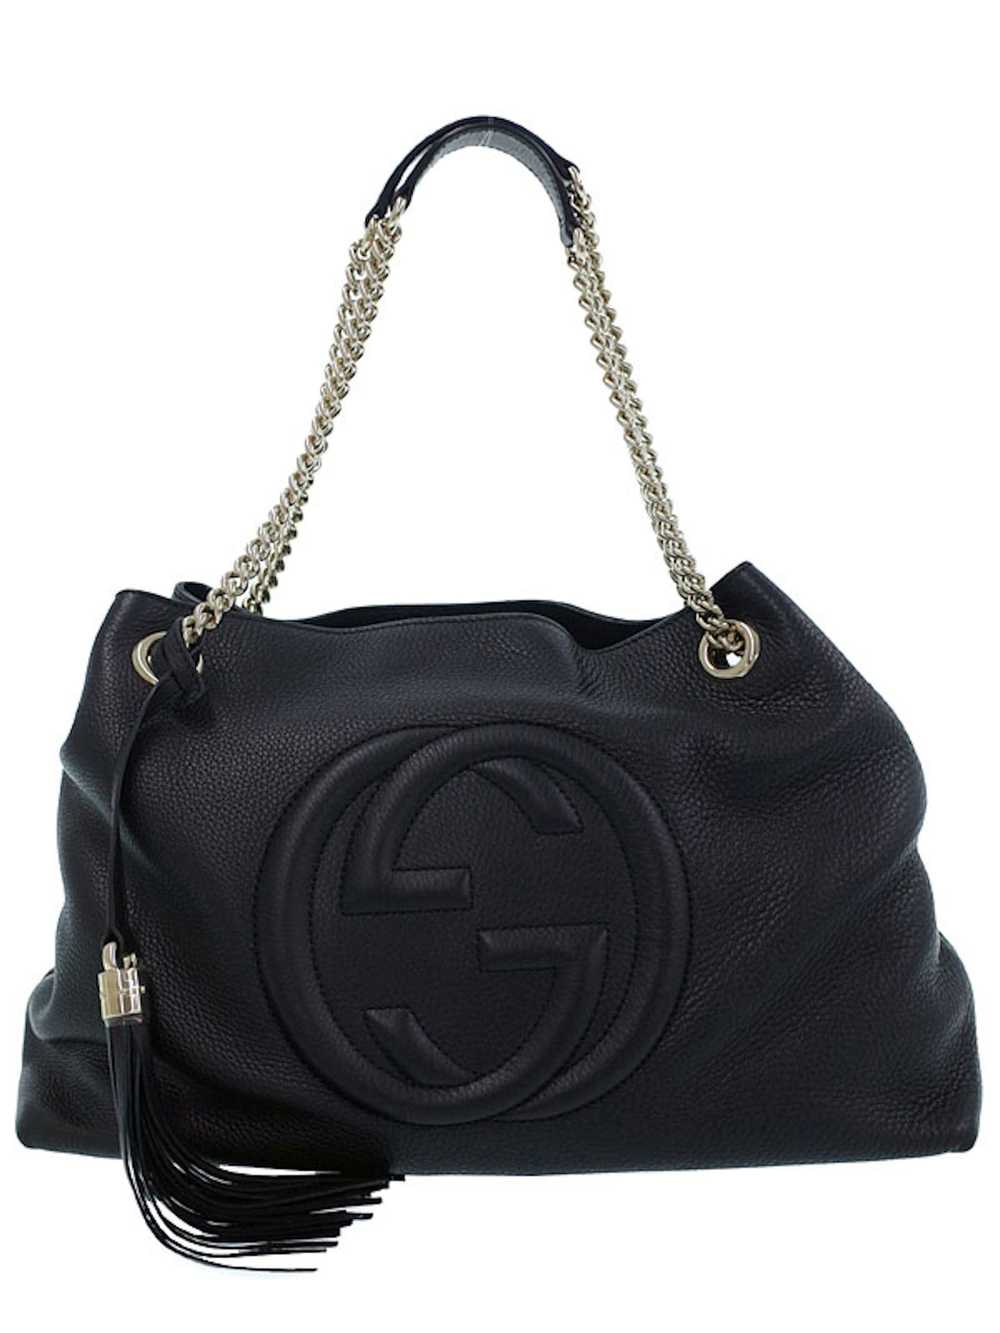 Gucci Gucci Leather Soho Chain Shoulder Bag Black - image 1